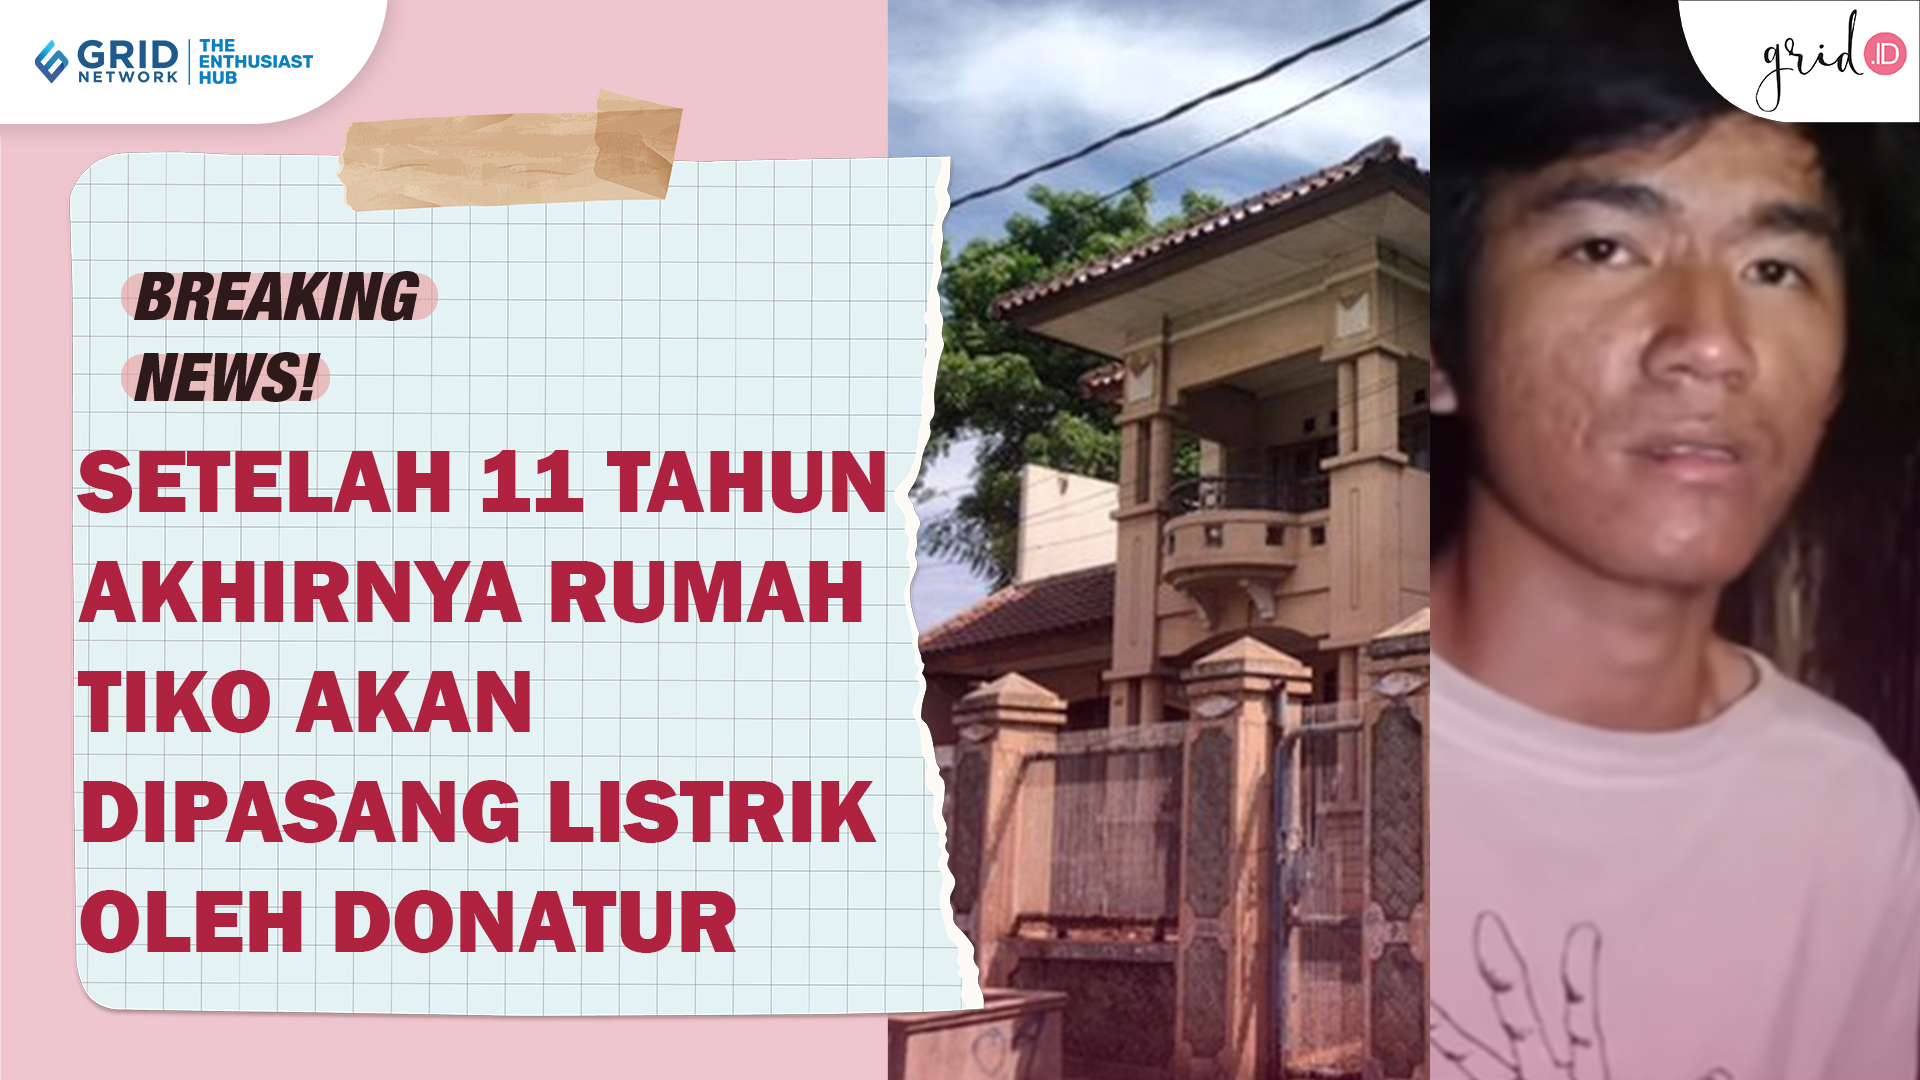 Rumah Tiko Akan Dipasang Listrik Setelah 11 Tahun, Ketua RT Sebut Ada Donatur yang Akan Bayar